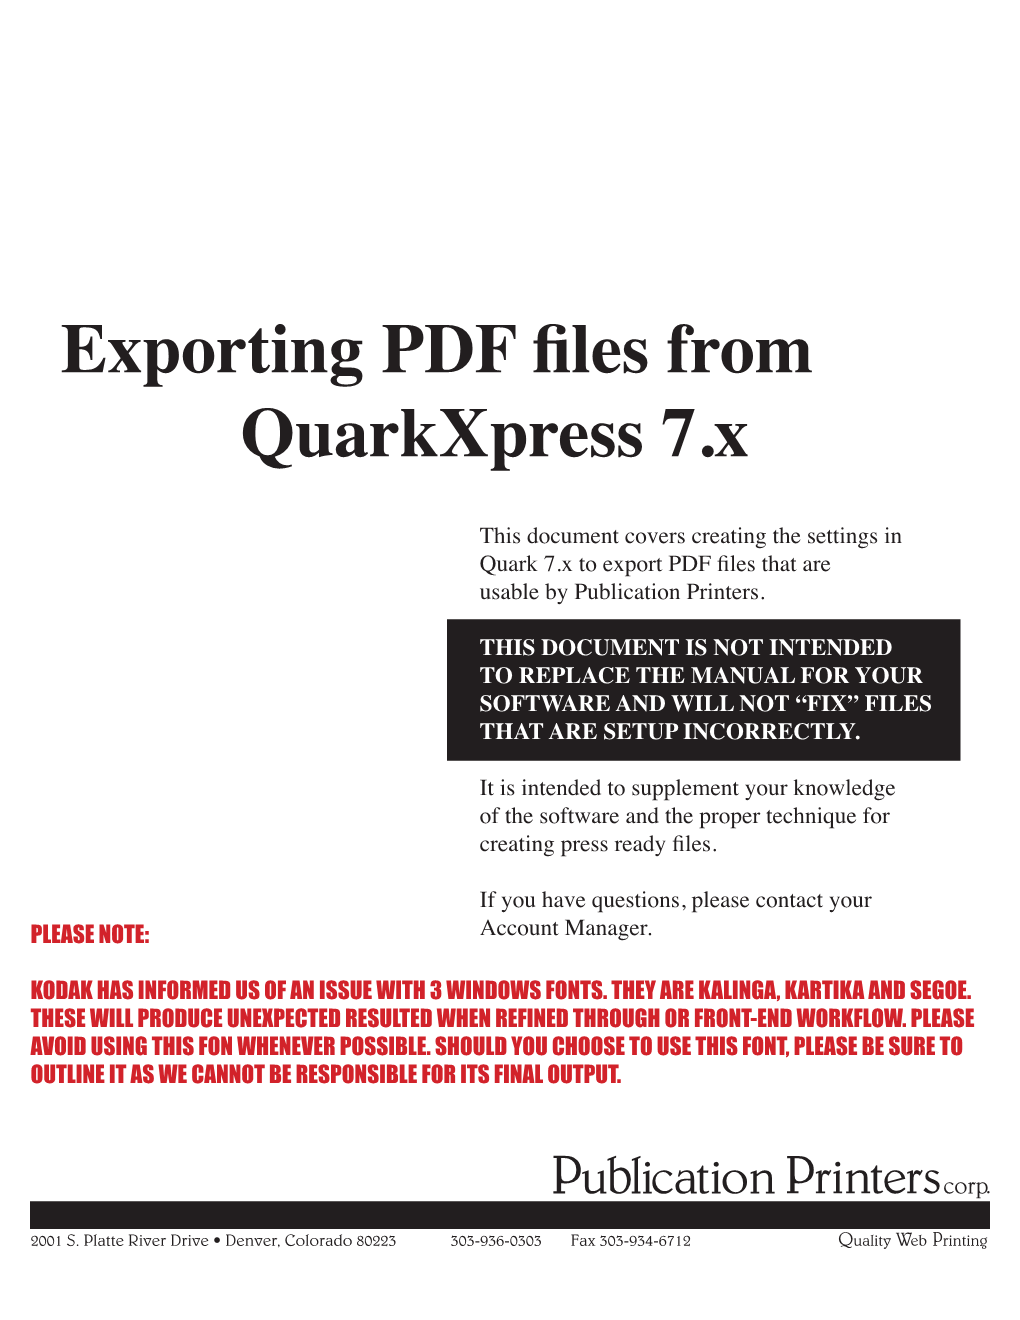 Exporting PDF Files from Quarkxpress 7.X